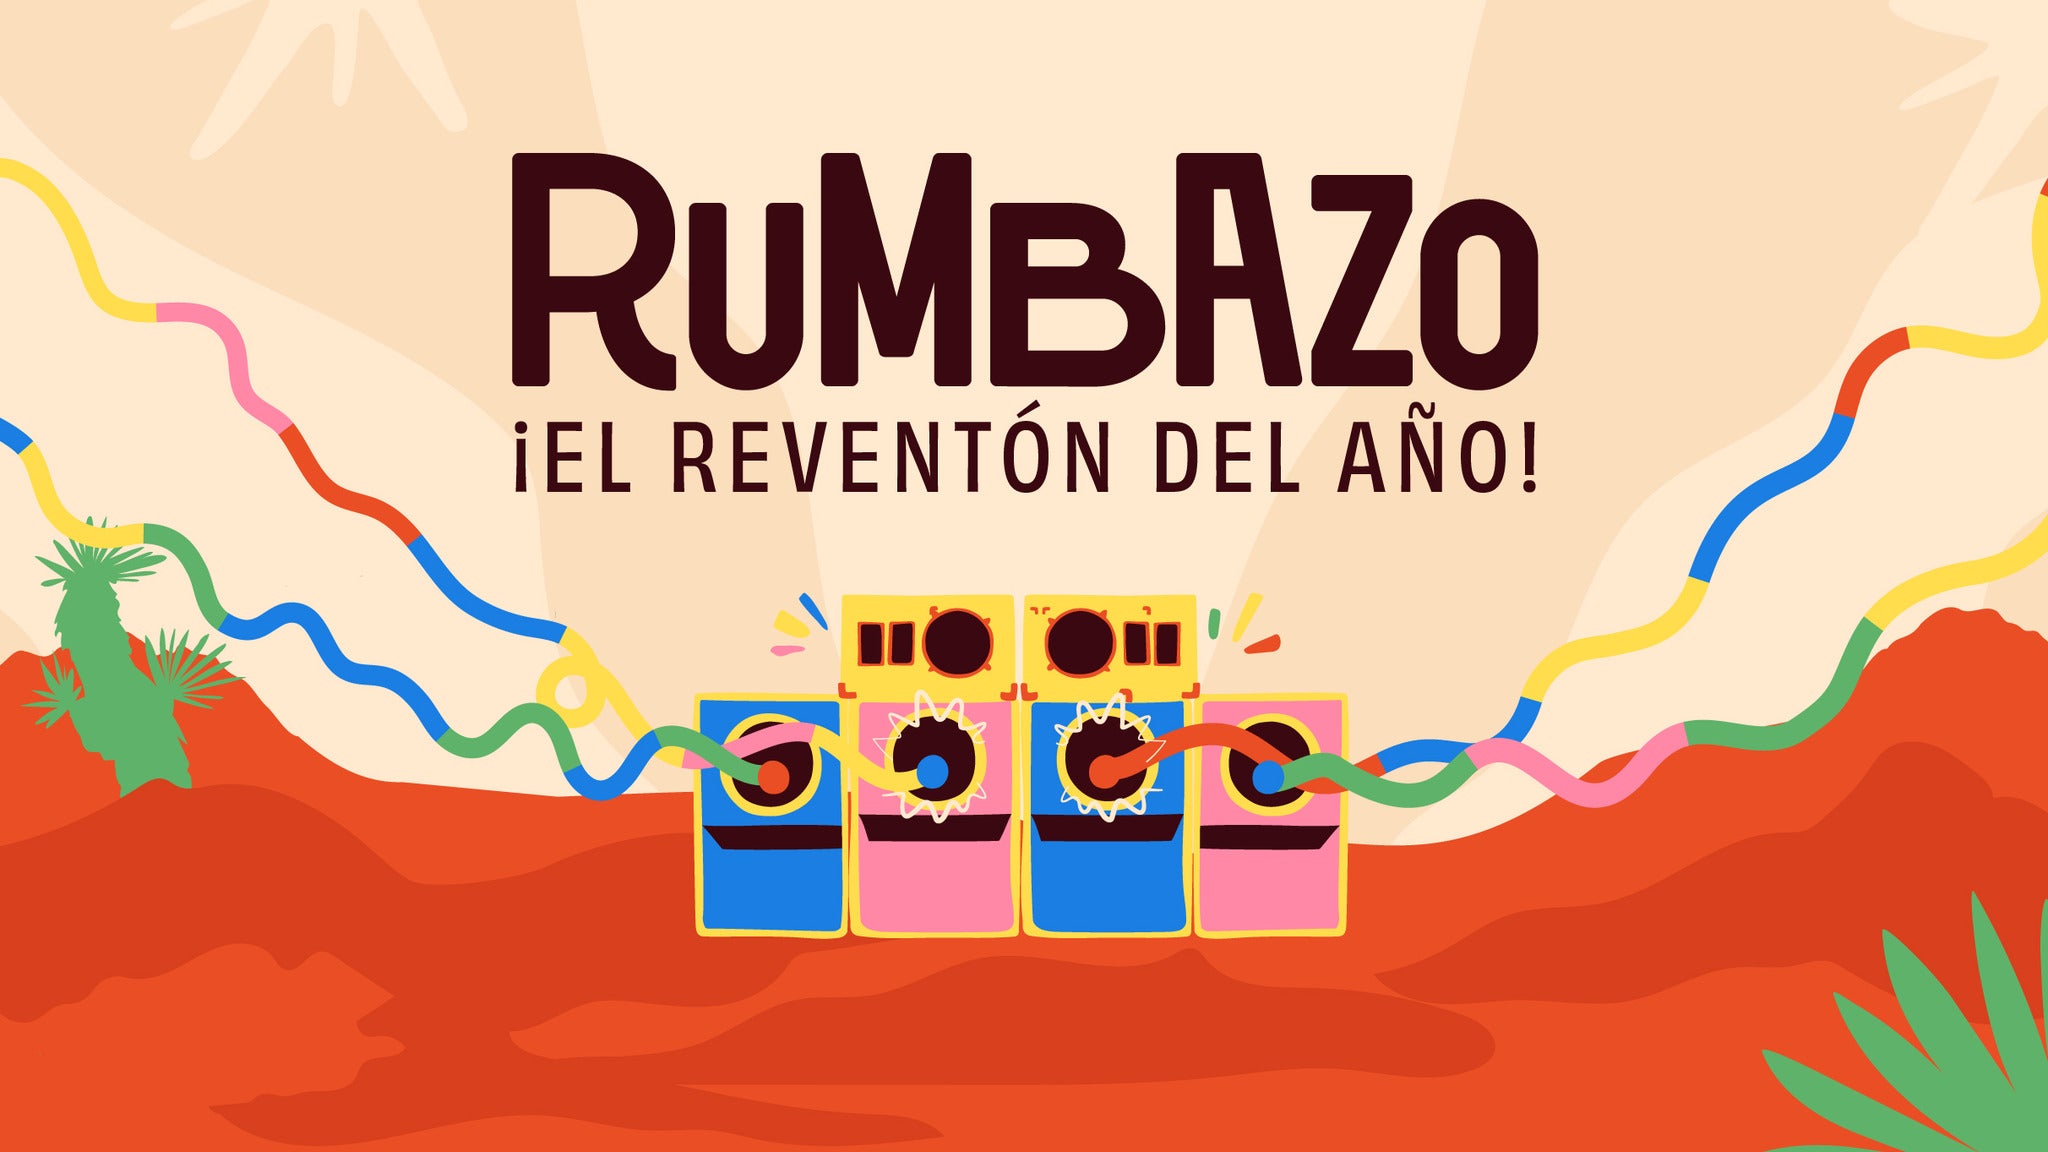 Rumbazo presale information on freepresalepasswords.com